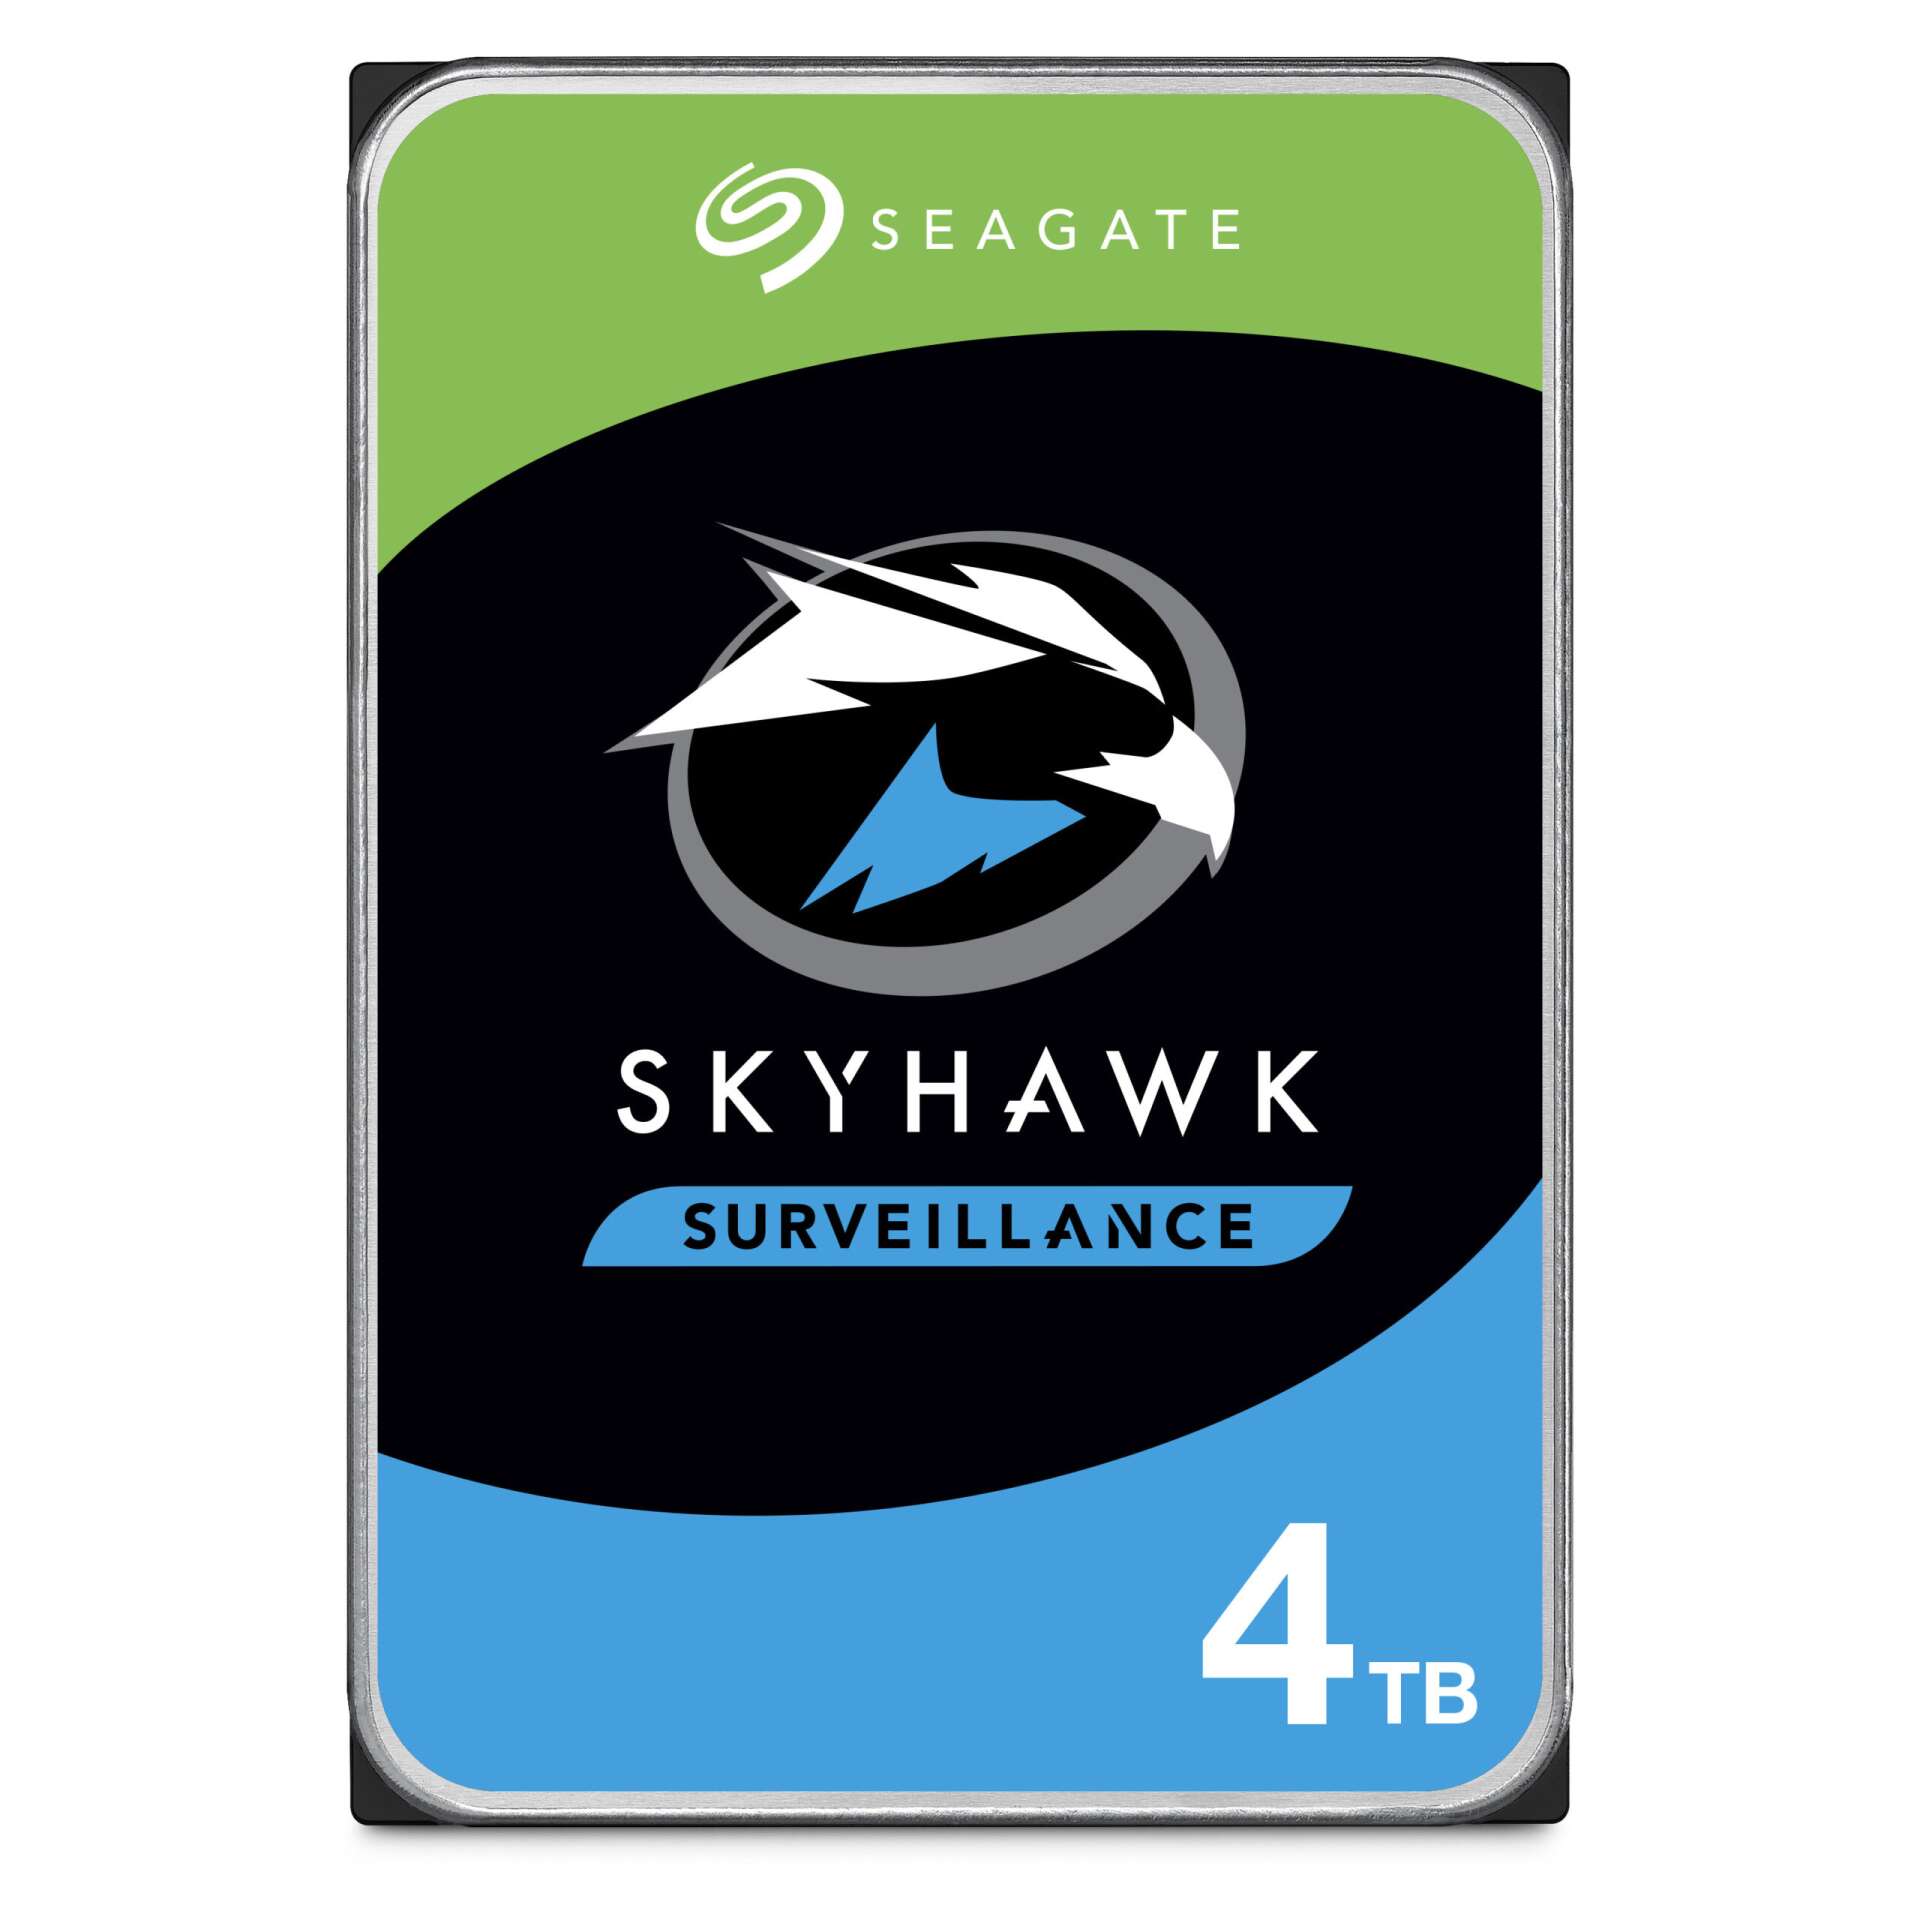 Seagate 4tb skyhawk surveillance sata3 3.5" dvr hdd